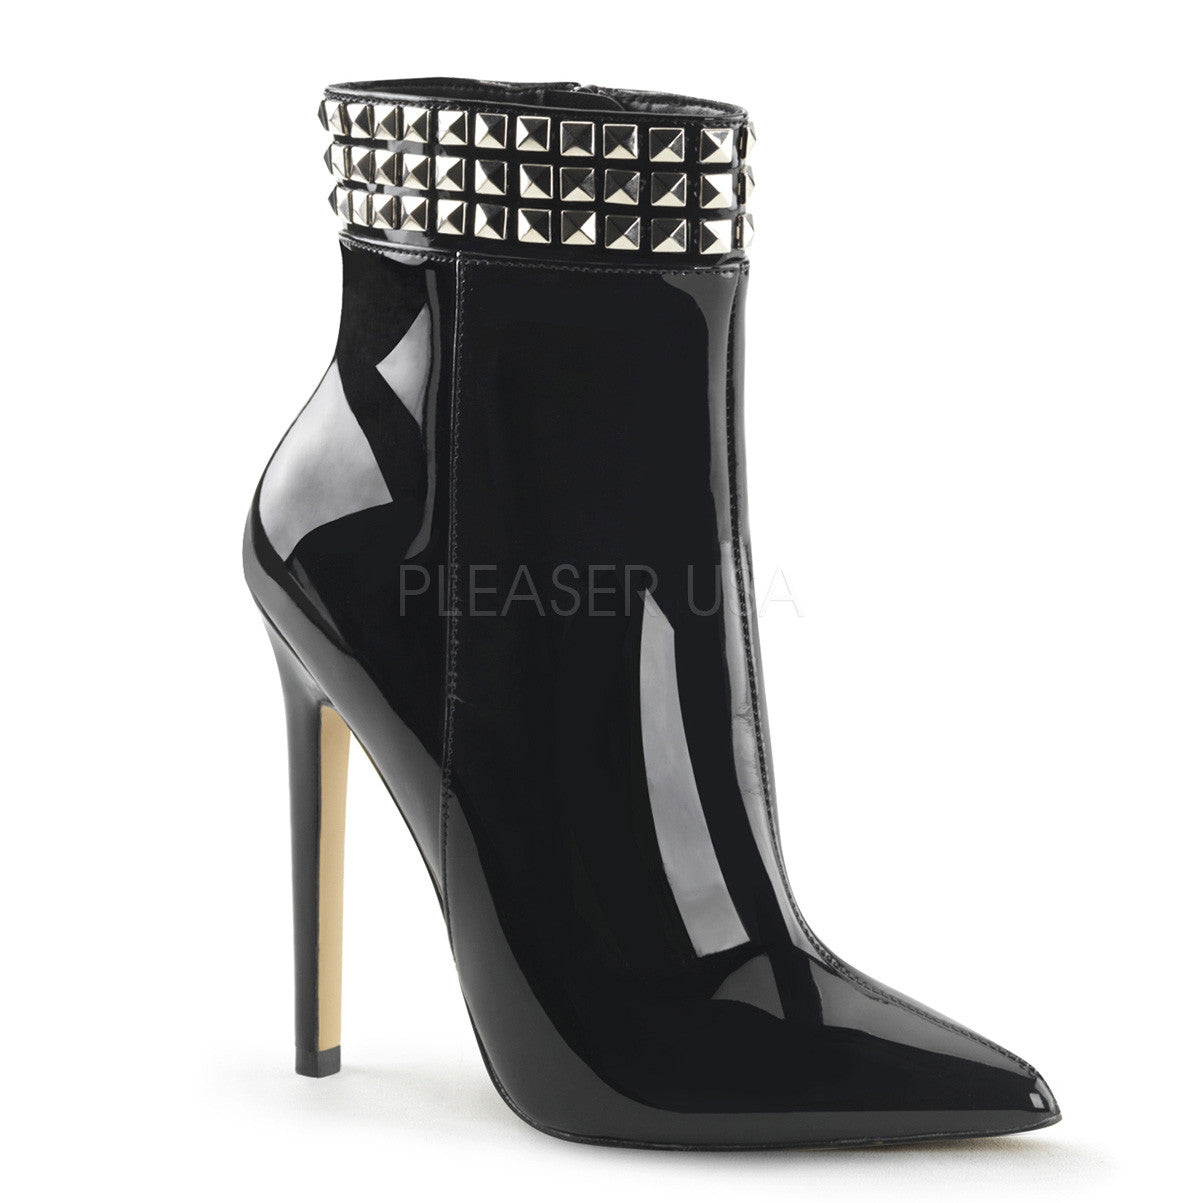 Pleaser SEXY-1006 Black Patent Ankle Boots - Shoecup.com